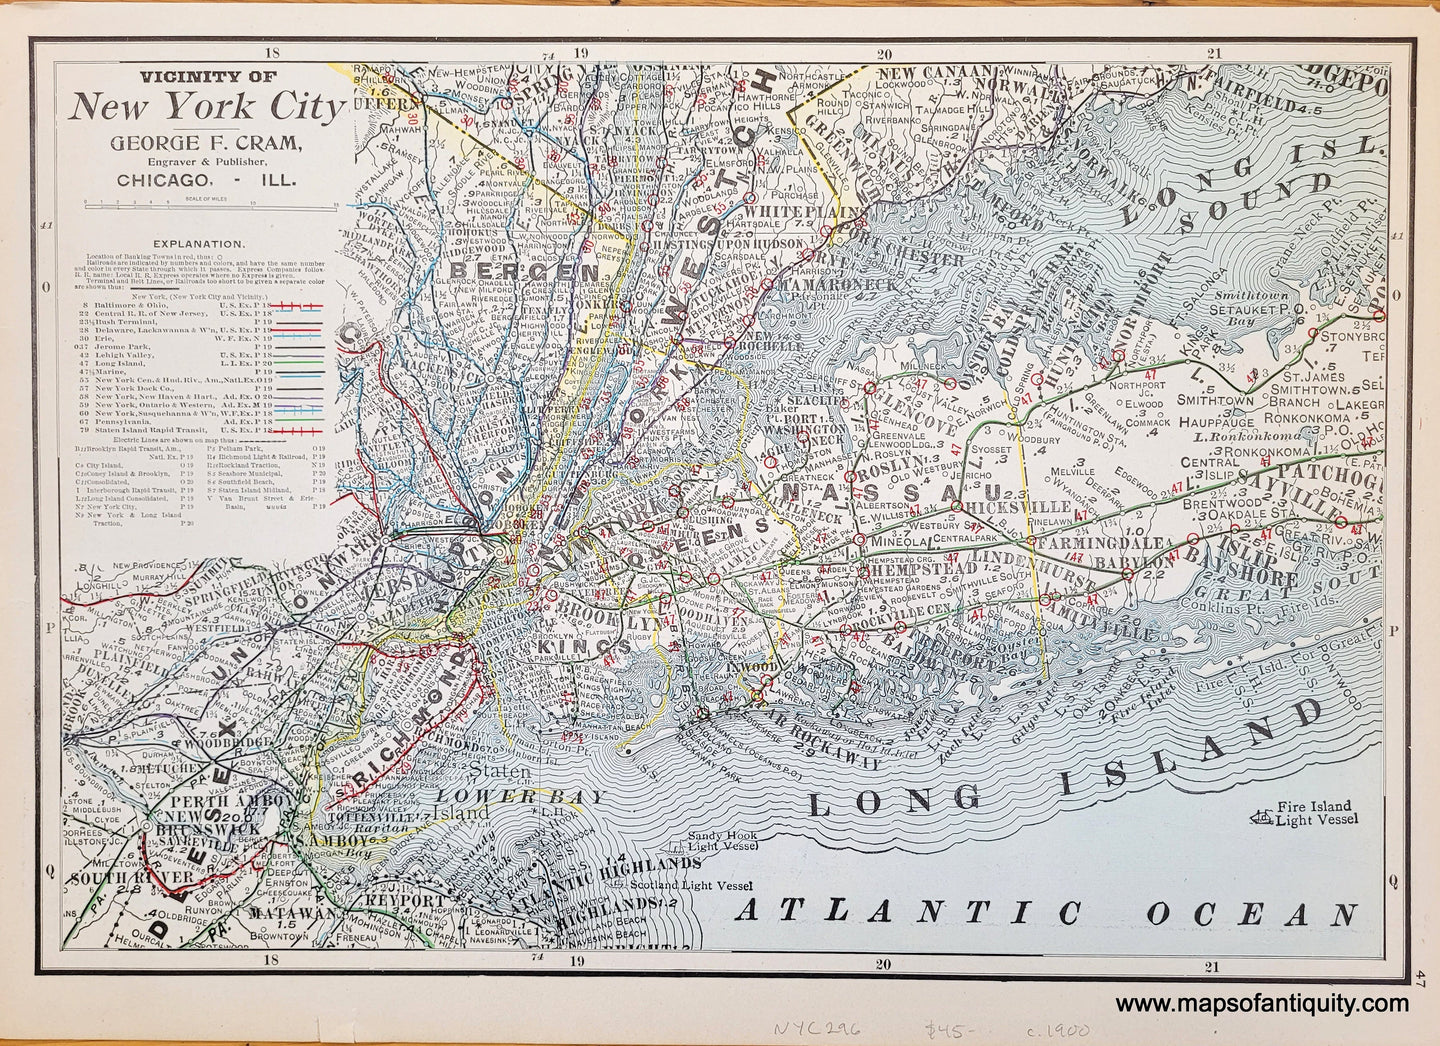 Genuine-Antique-Map-Vicinity-of-New-York-City-1900-circa-Cram-Maps-Of-Antiquity